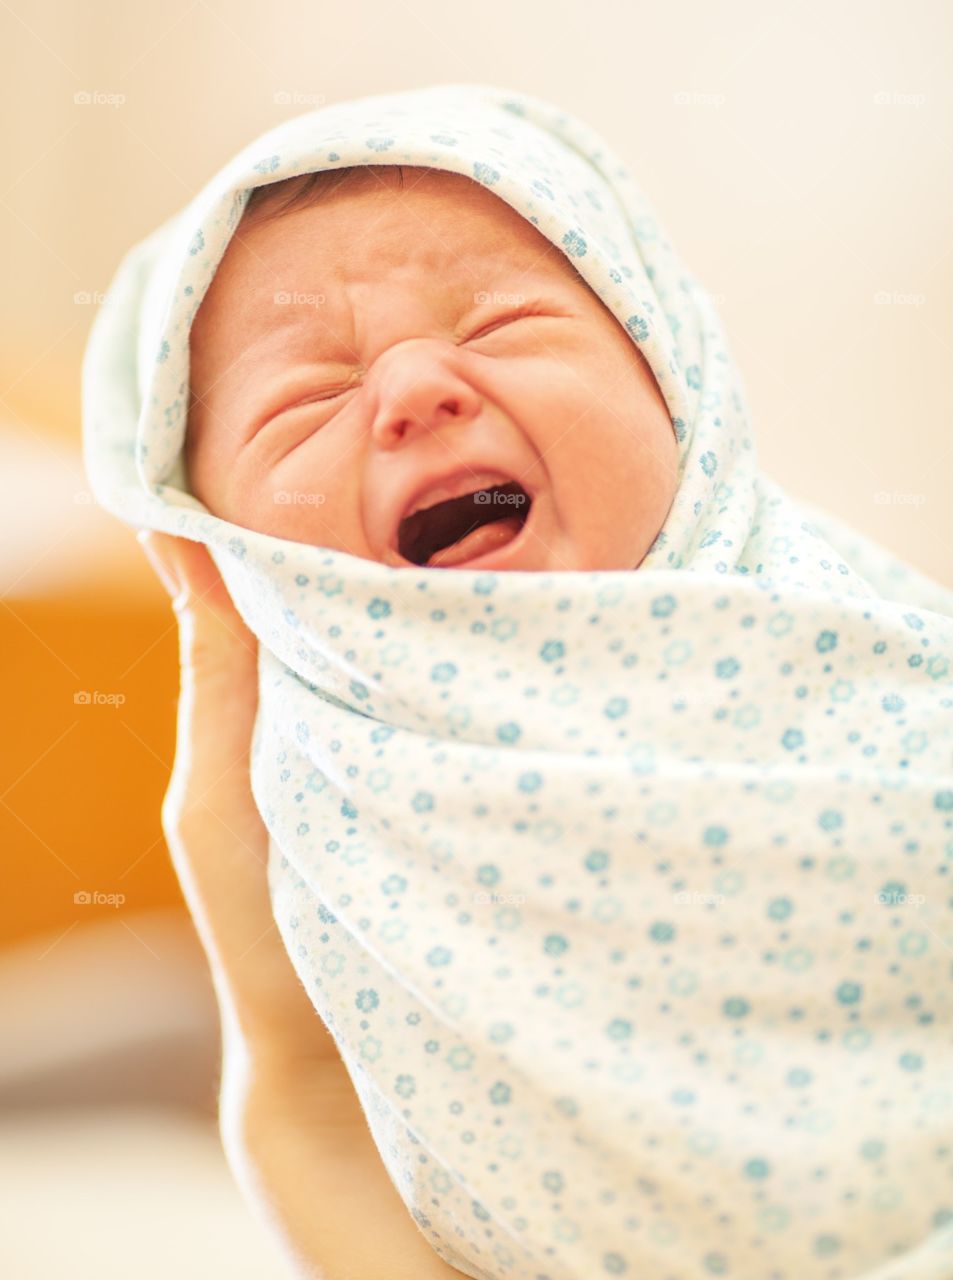 Newborn. newborn baby screams